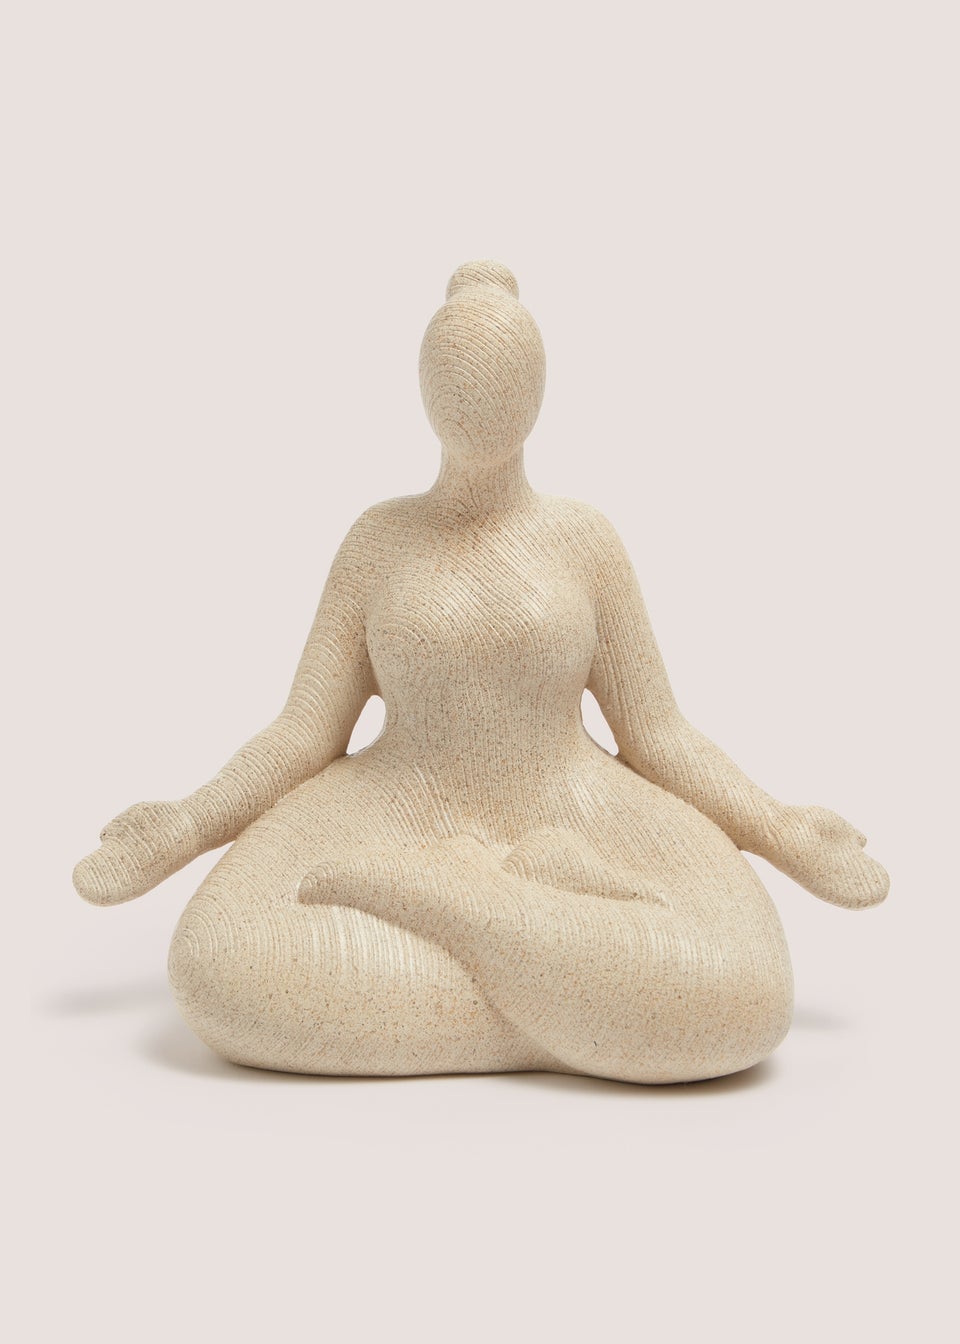 Cabana Curvy Yoga Lady (51cm x 45cm x 27cm)